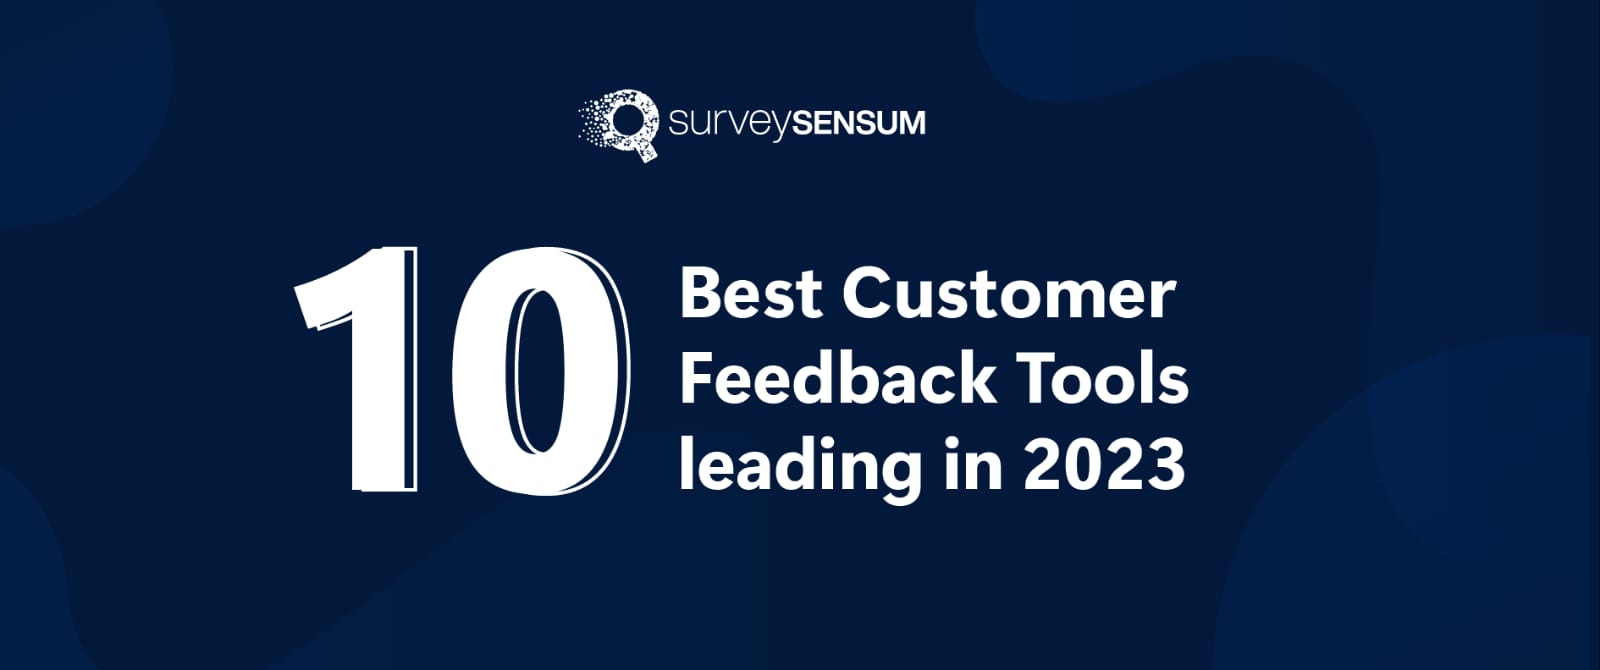 10 Best Customer Feedback Tools leading in 2023